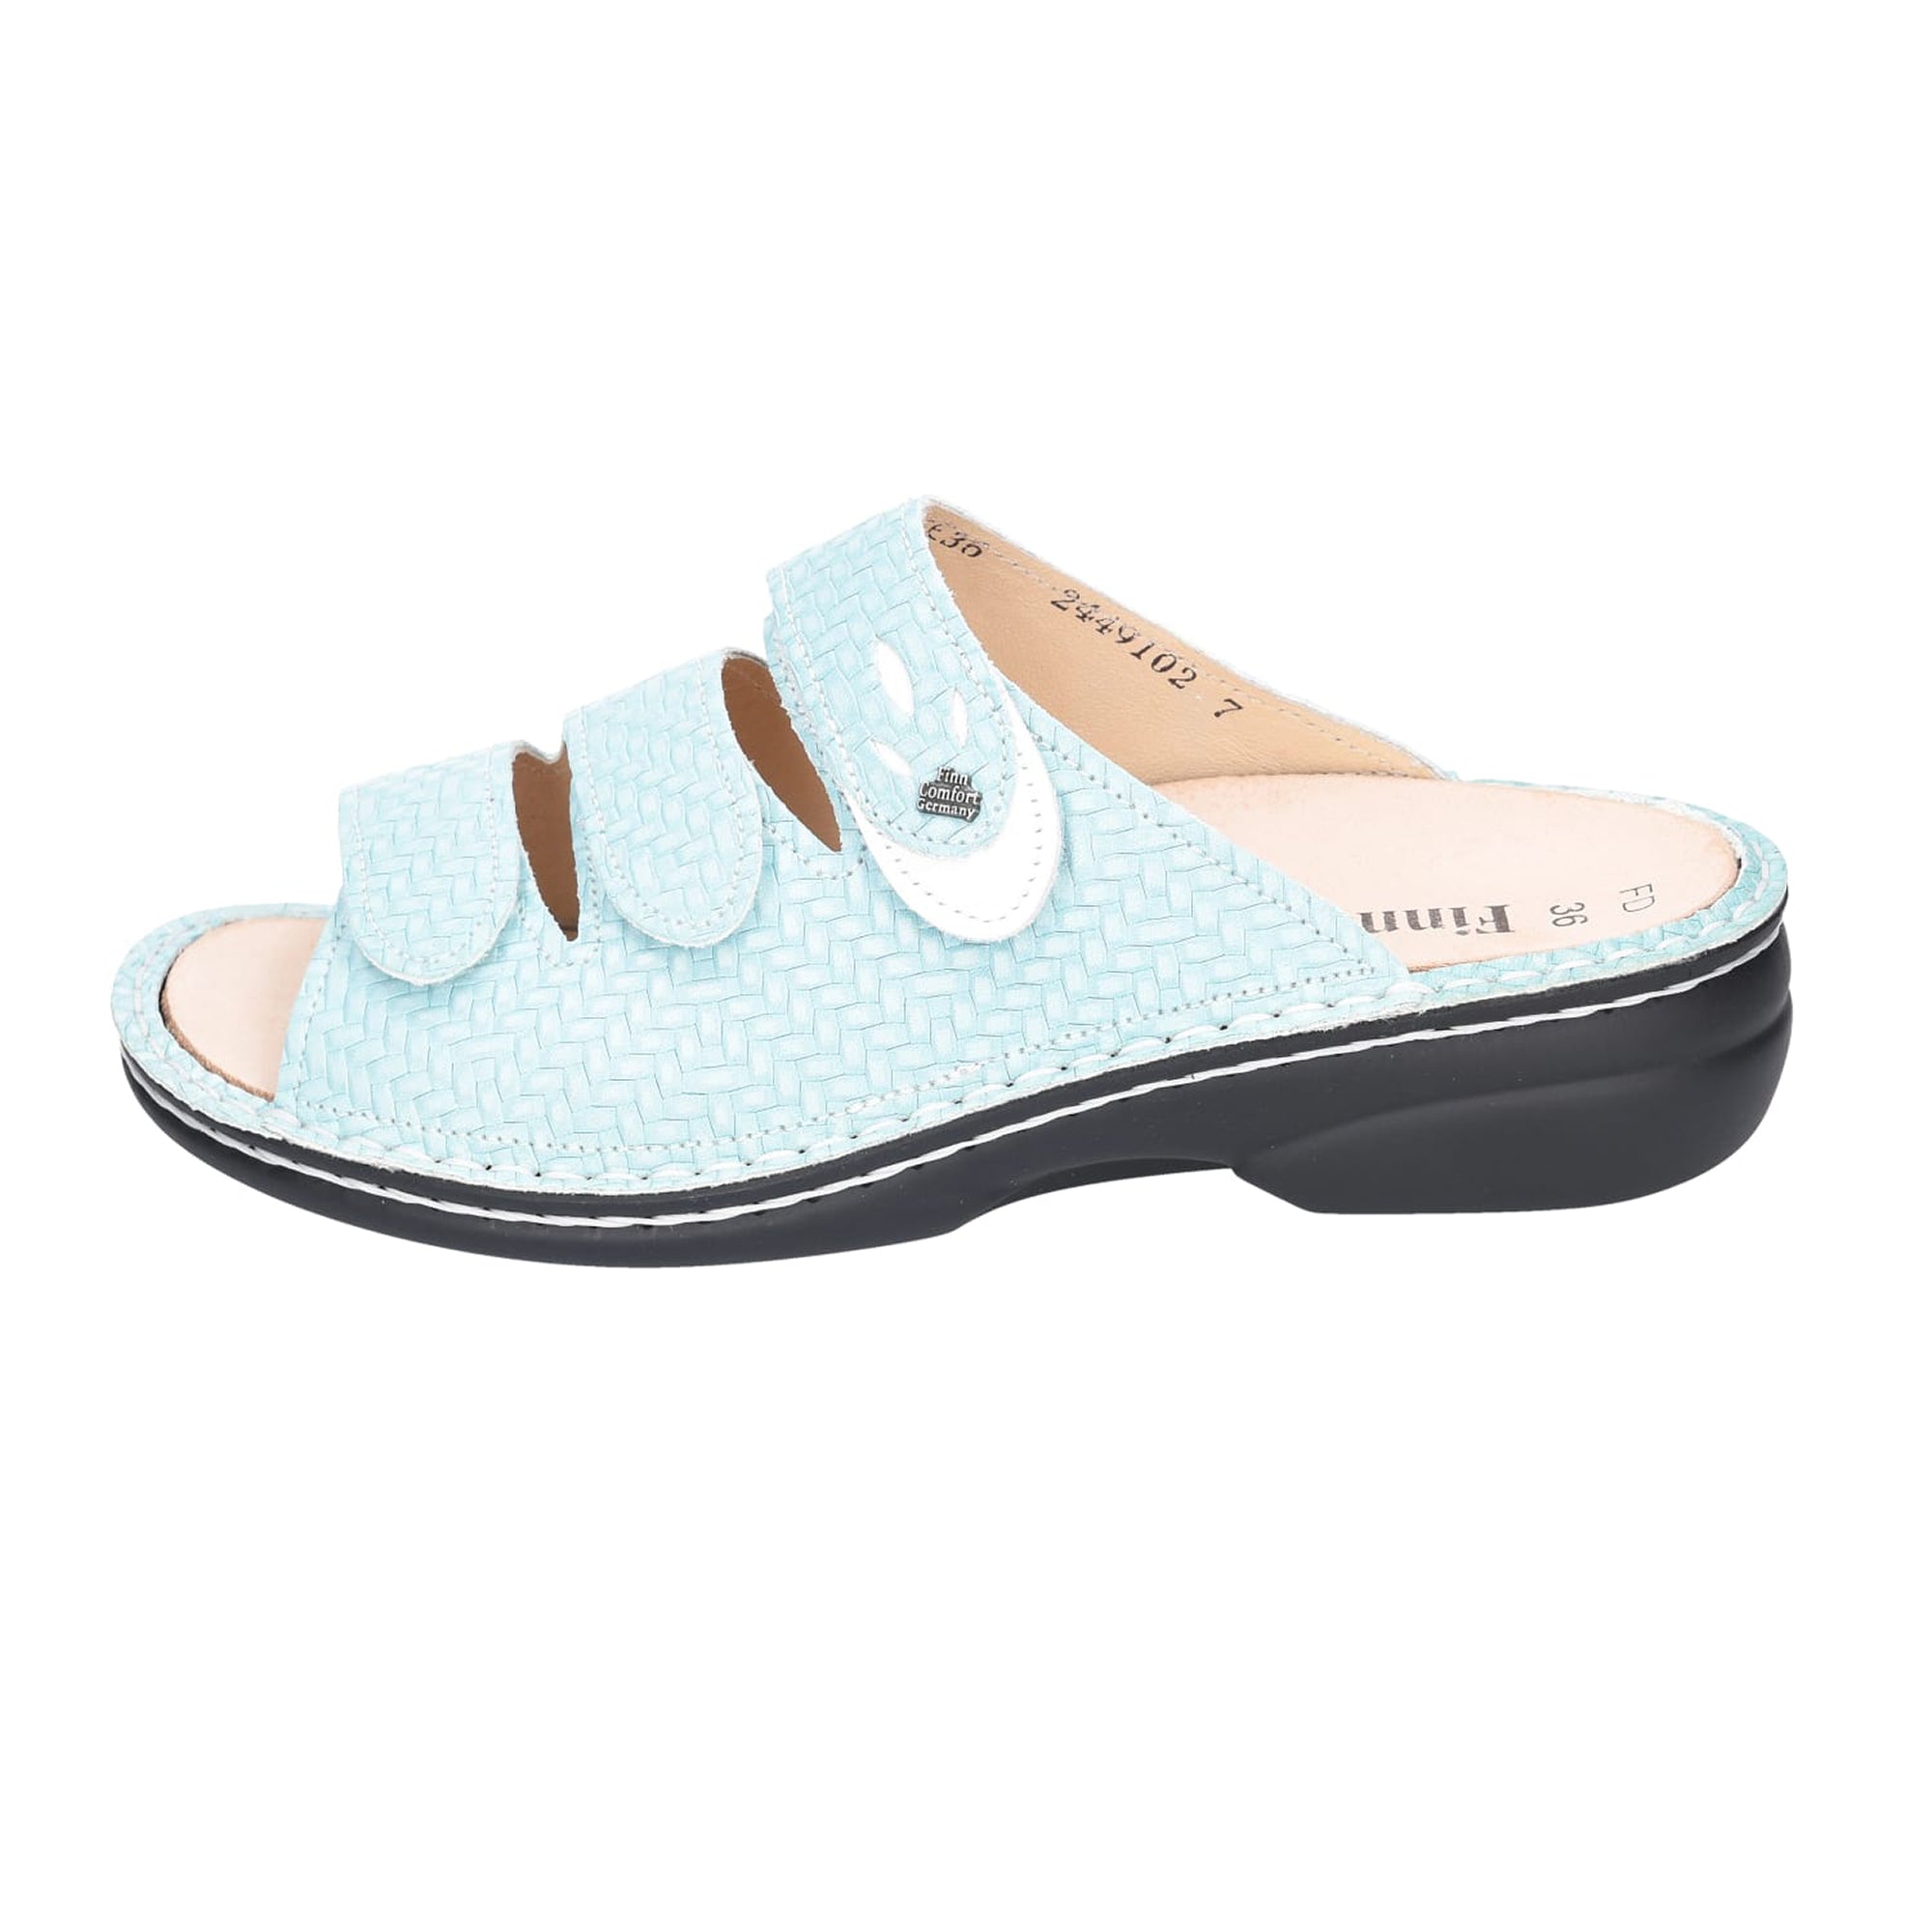 Finn Comfort 02554 KOS Women's Sandals, Turquoise - Stylish & Comfortable